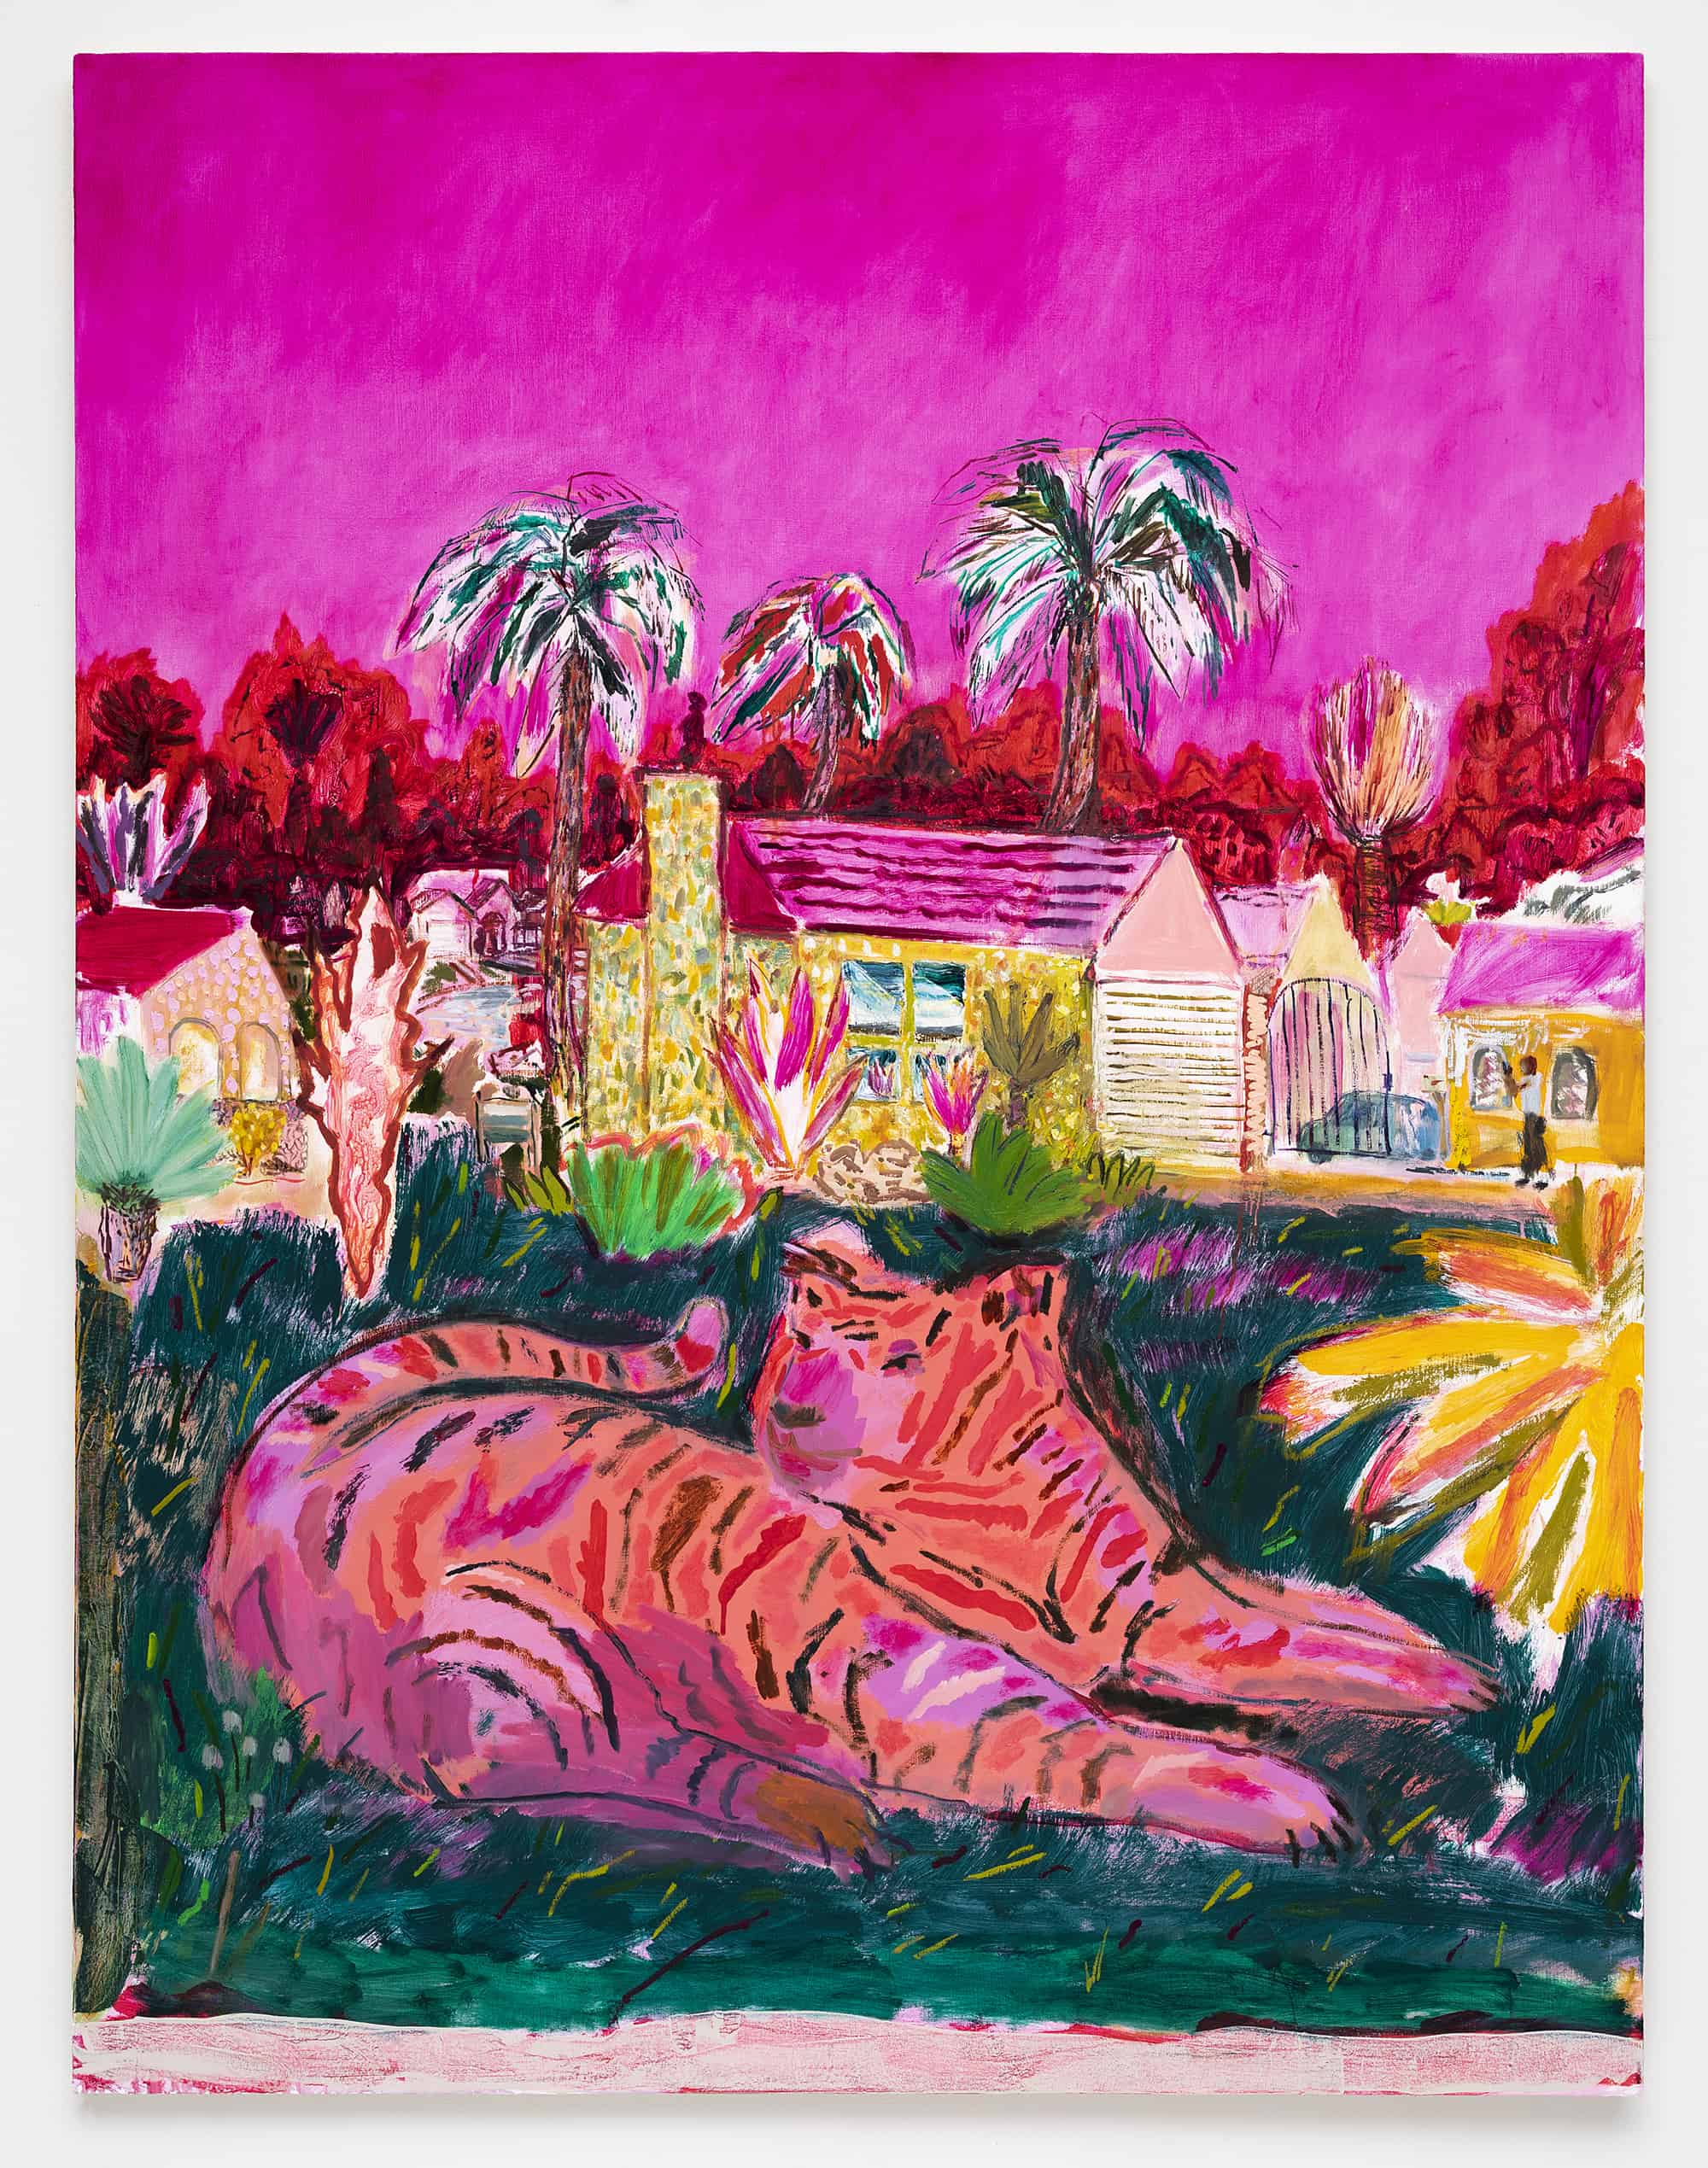 Tiger, Lisa Sanditz, Evergreen. Huxley-Parlour Gallery, 3-5 Swallow Street, London, W1B 4DE.